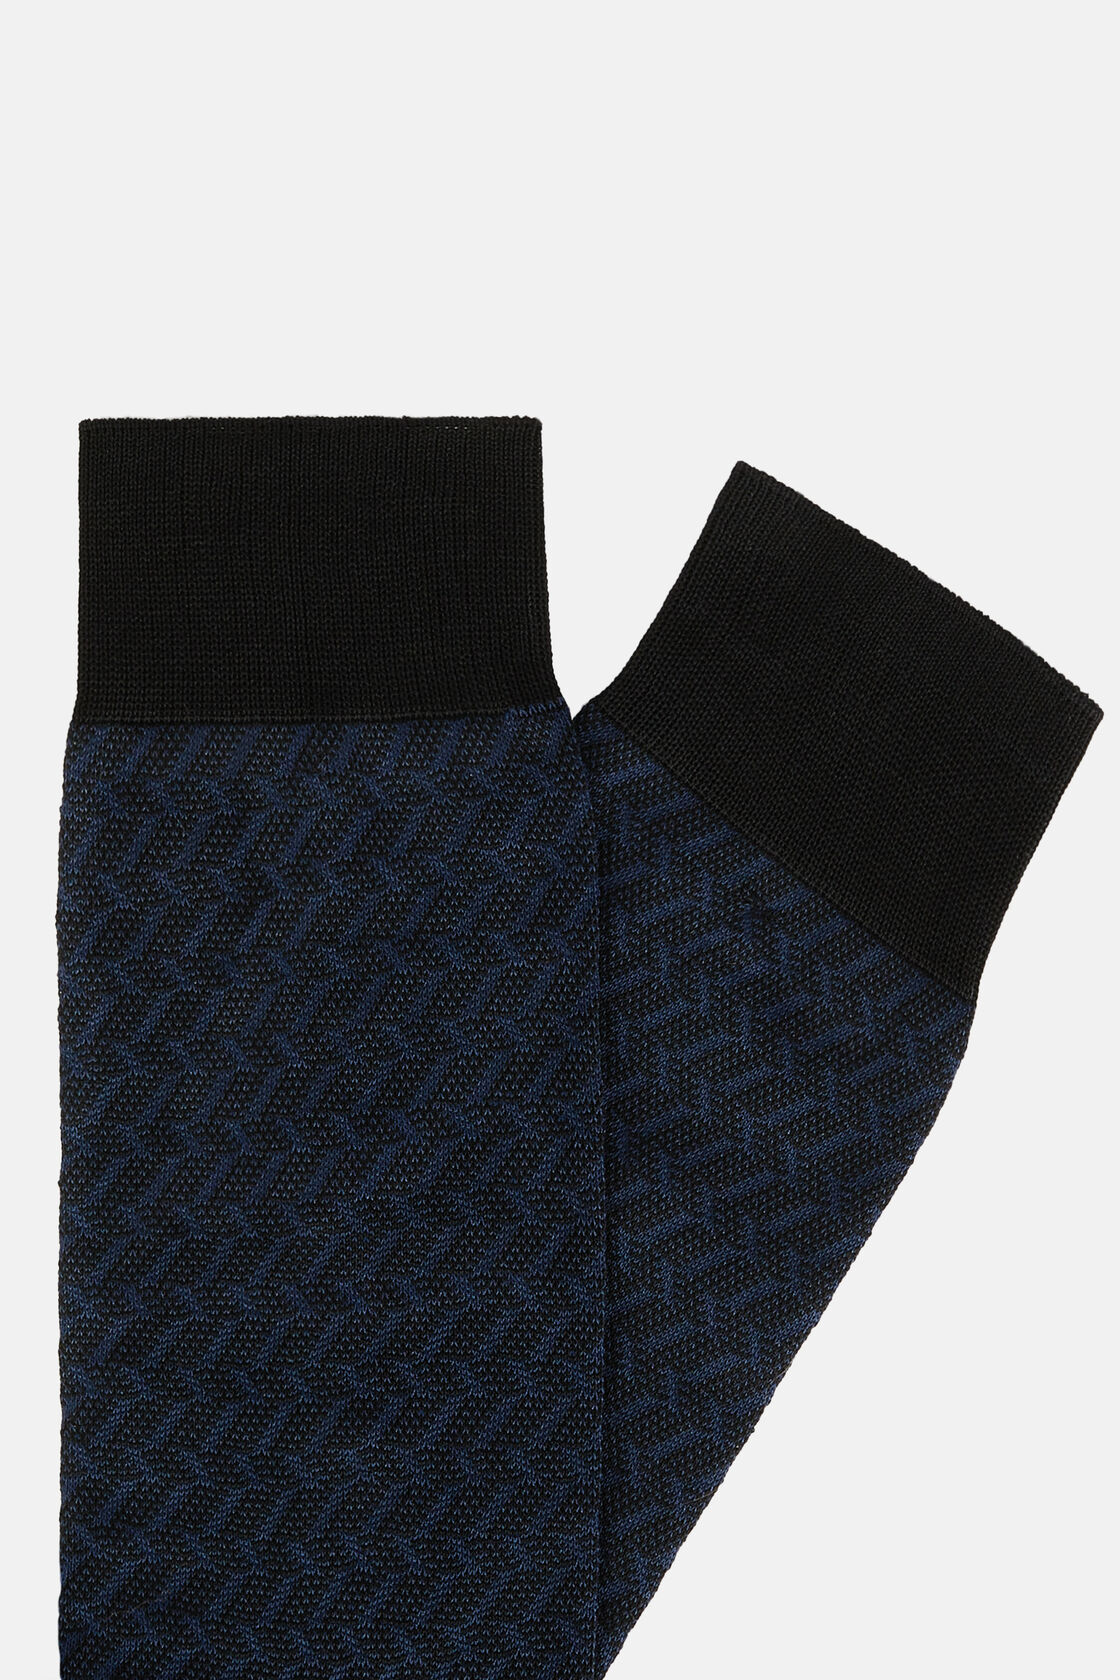 Micro Patterned Cotton Blend Socks, Navy blue, hi-res